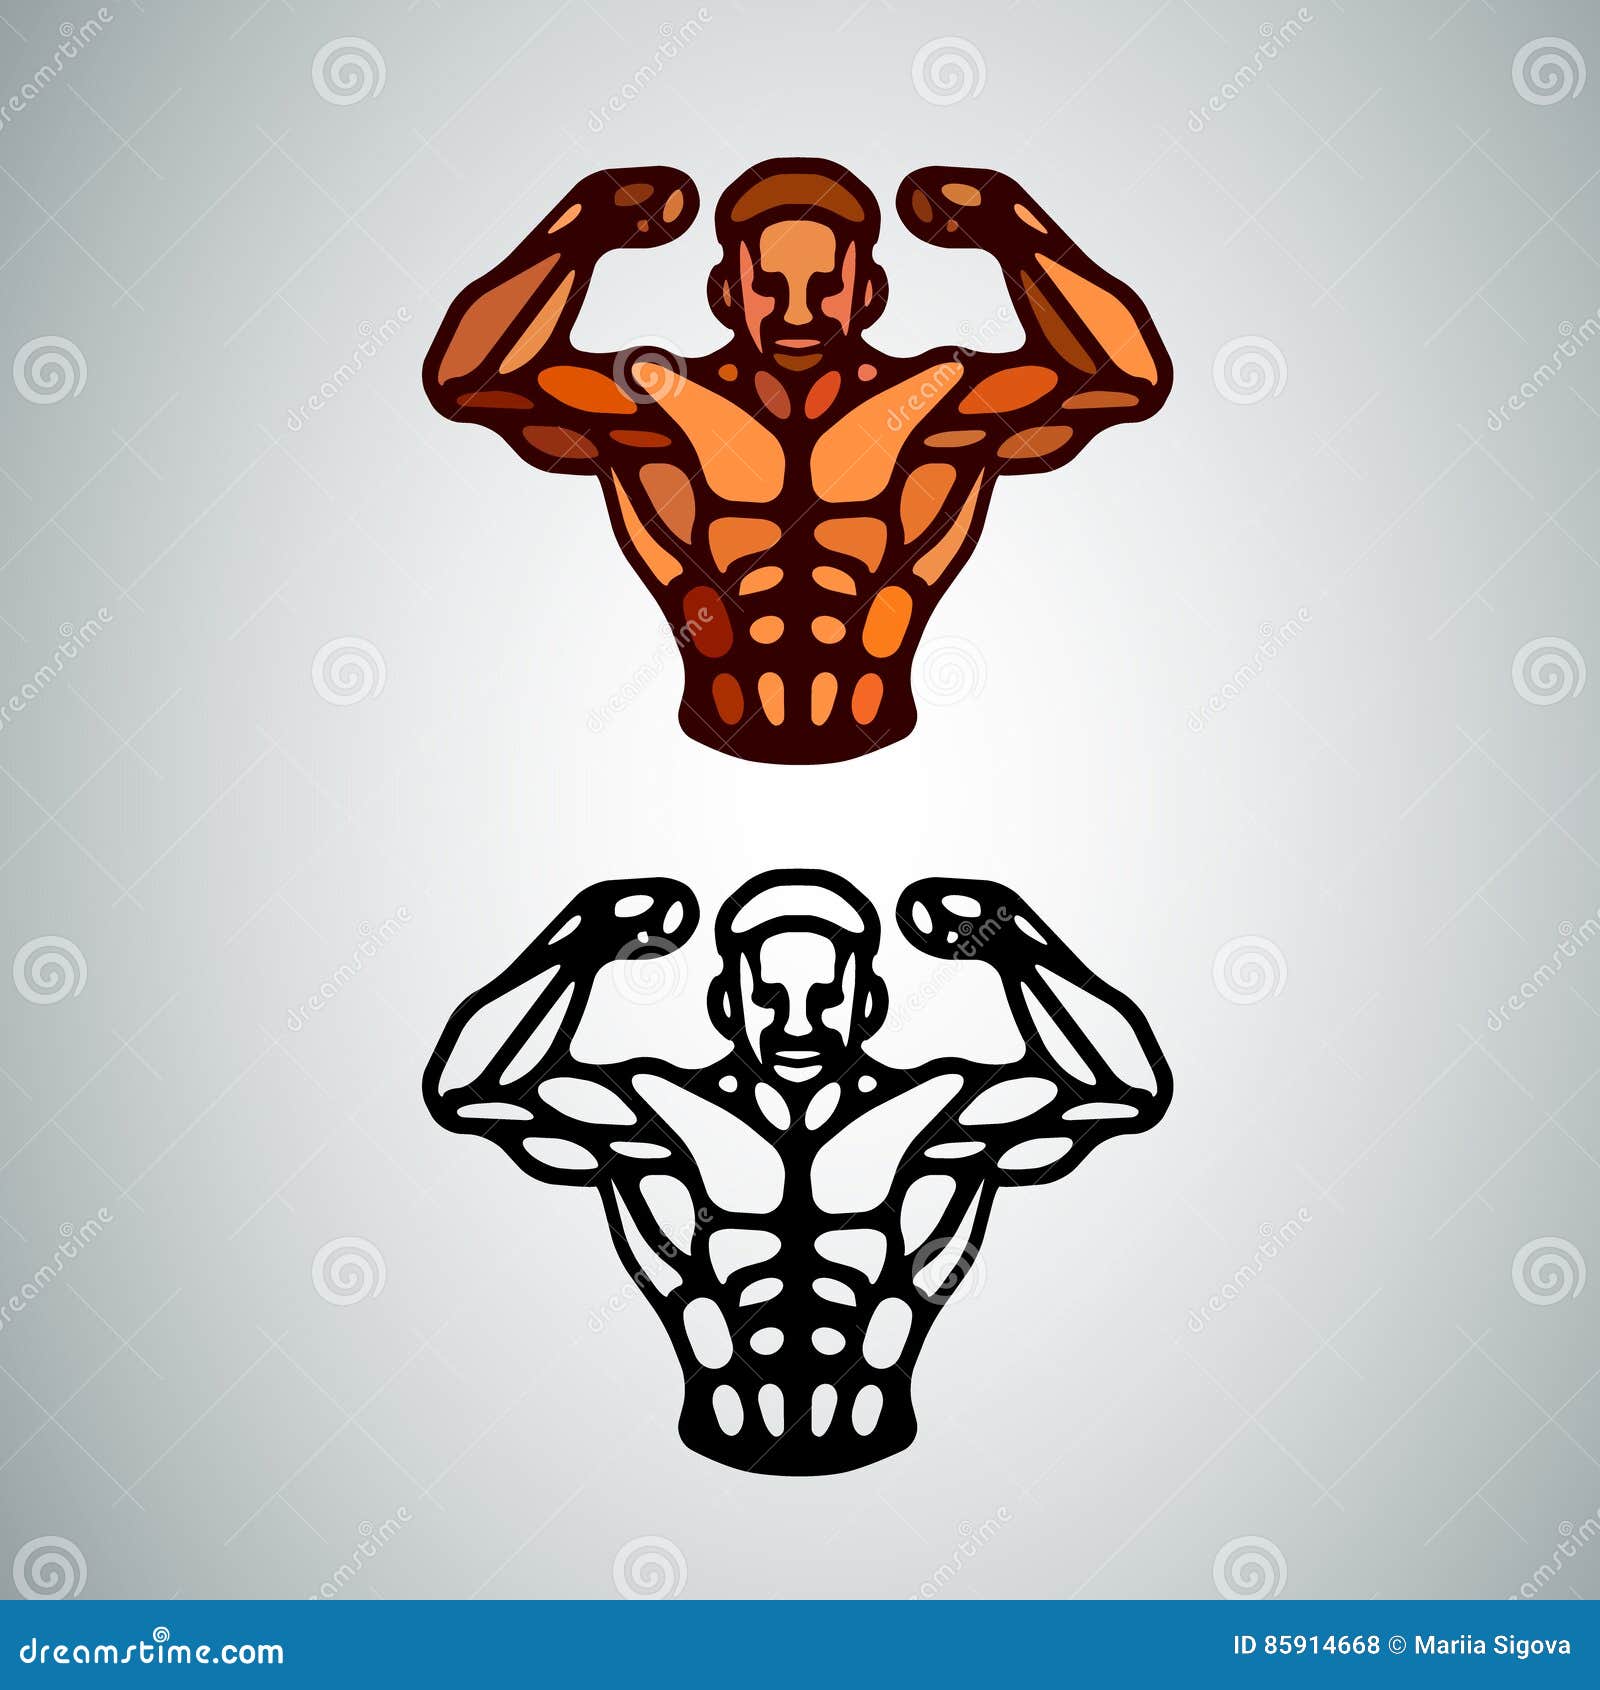 Athletic Man Torso Icon. Simple Illustration of Bodybuilder Torso Stock ...